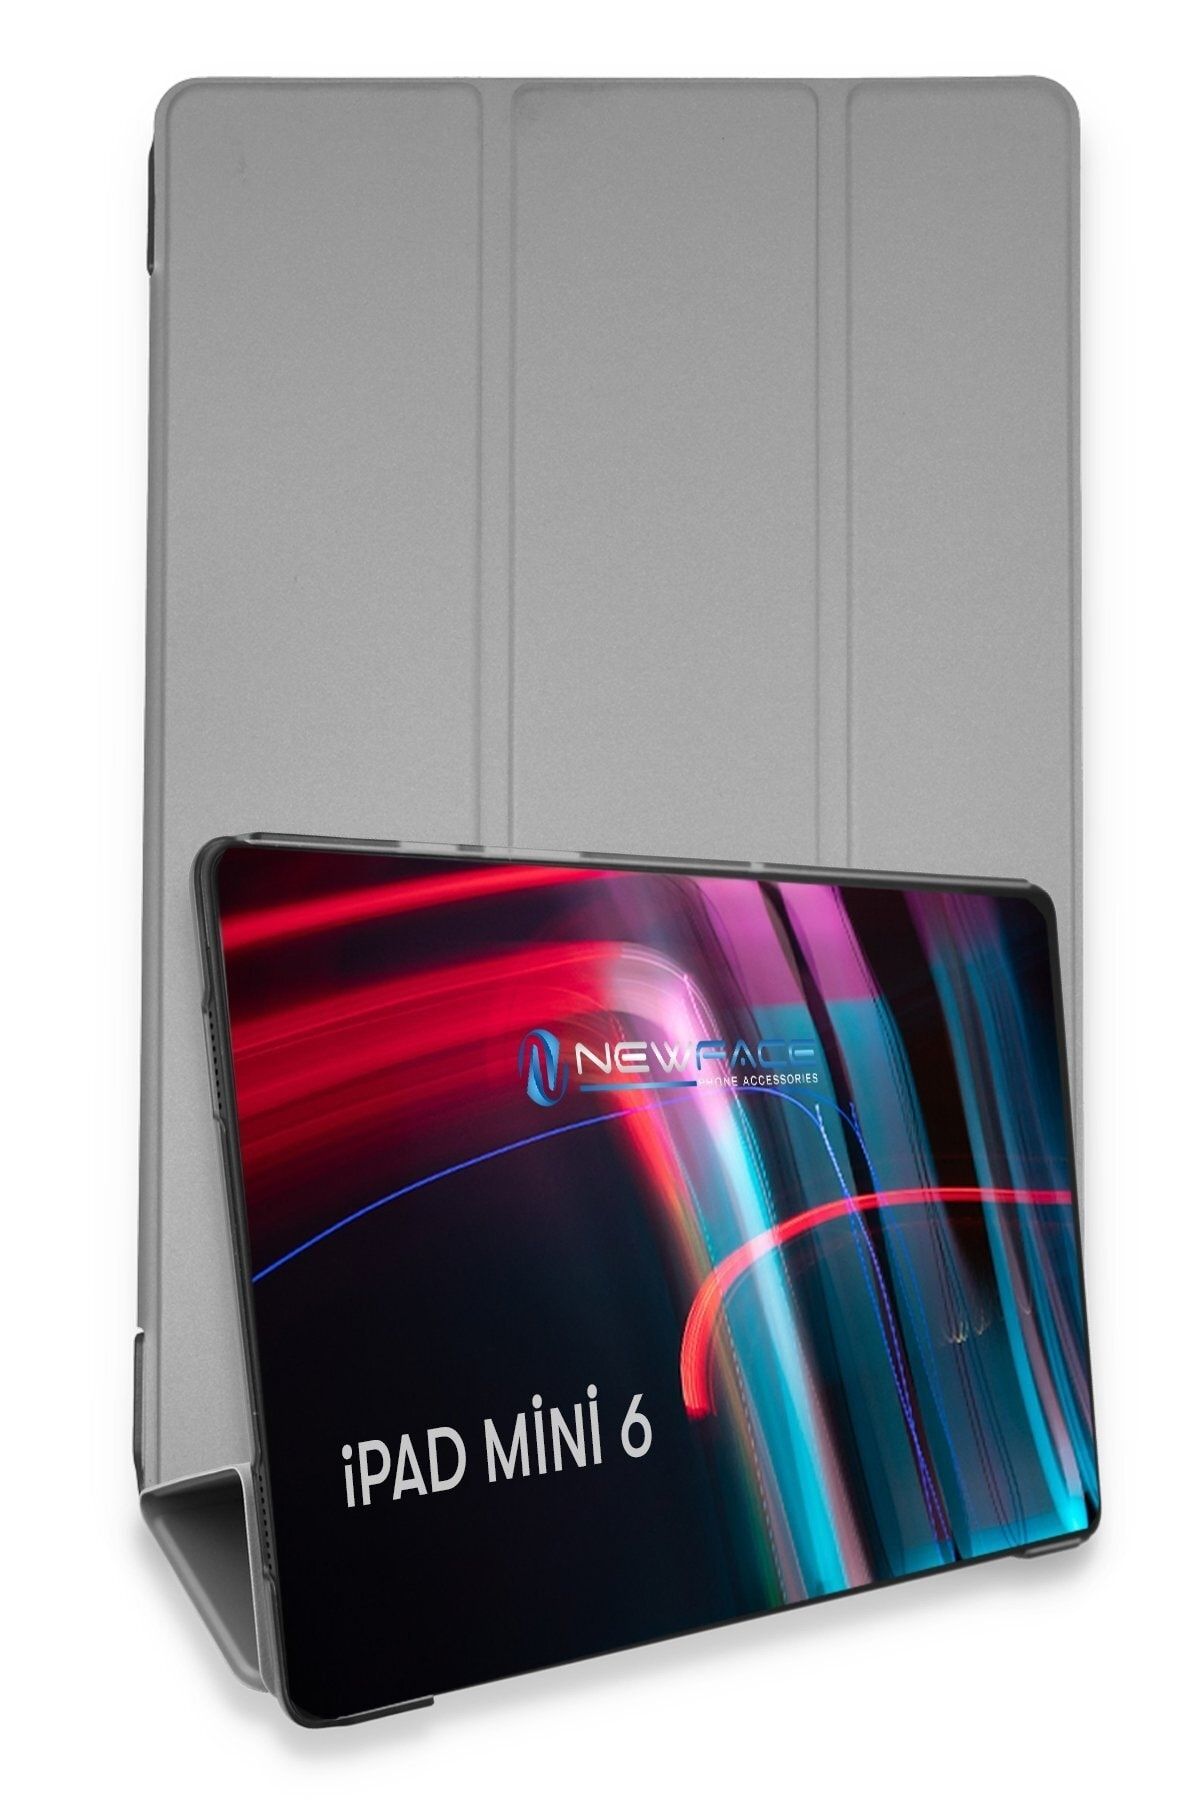 Bilişim Aksesuar Ipad Mini 6 Kılıf Tablet Smart Cover Kılıf - Gri